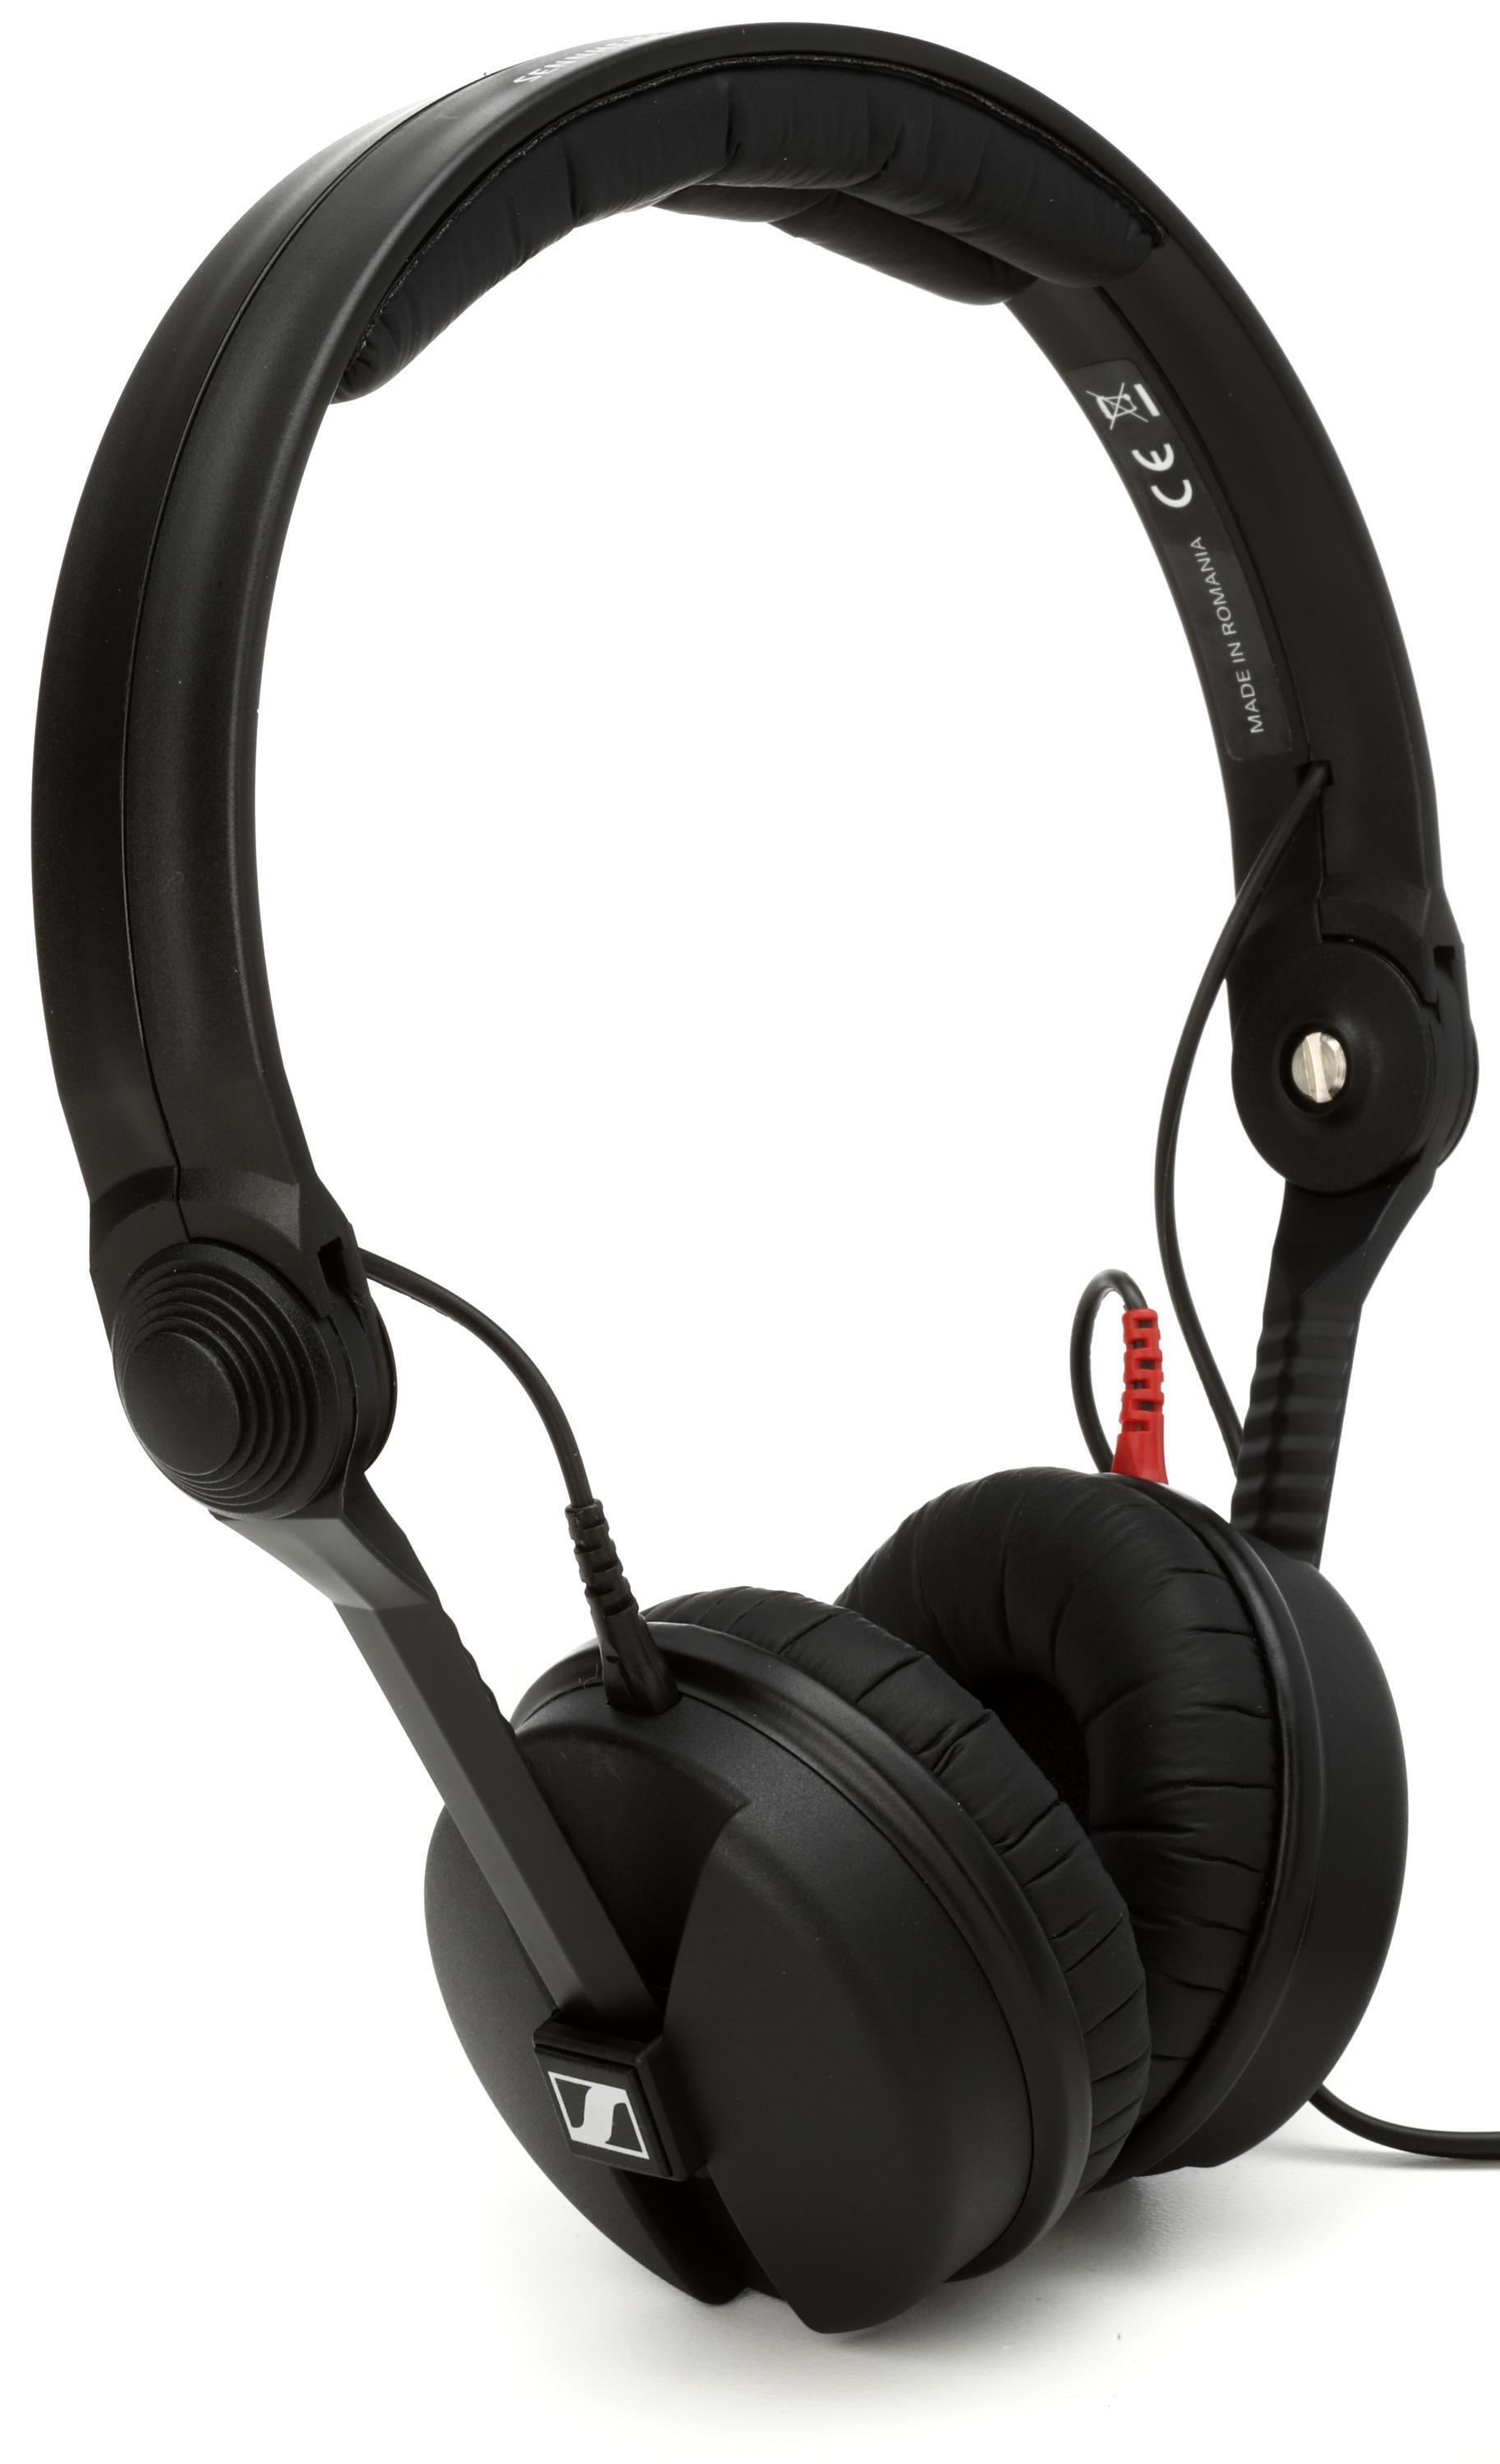  Sennheiser Professional HD 25 LIGHT On-Ear DJ Headphones,Black  : Musical Instruments